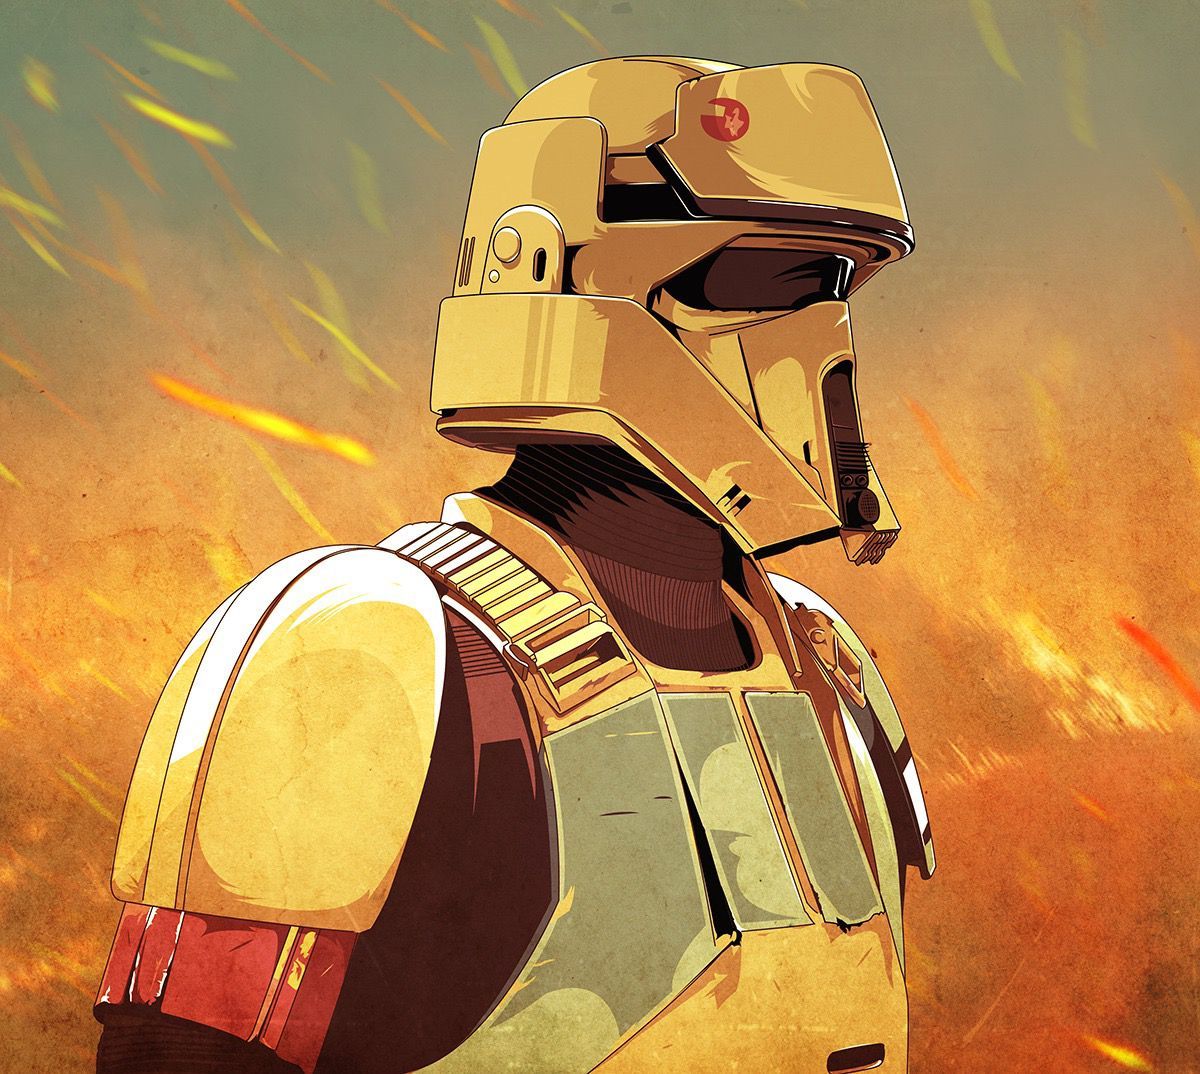 Imperial Shoretrooper. Star wars image, Star wars cards, Star